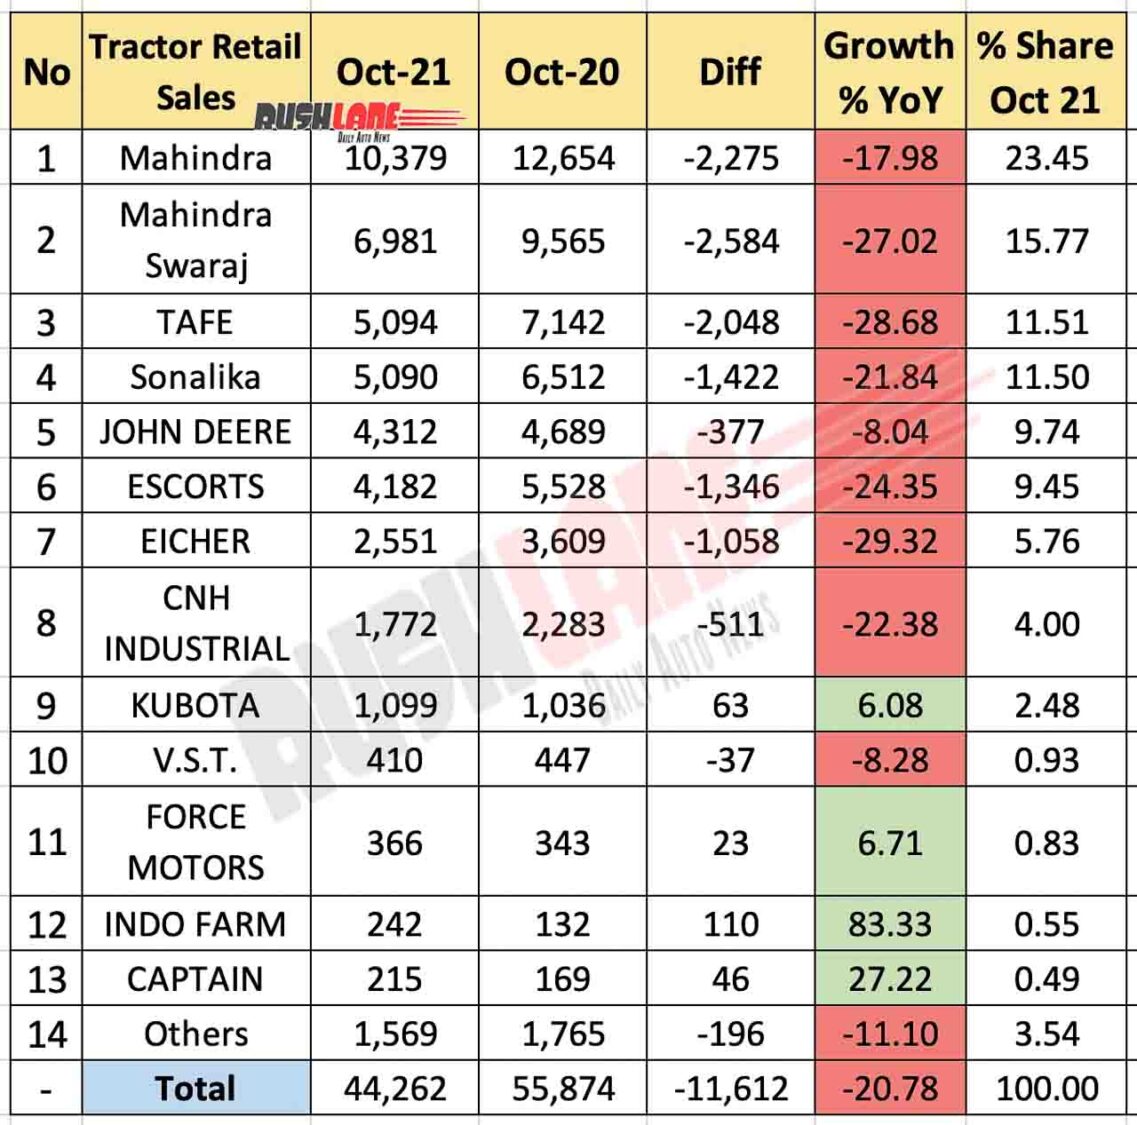 Tractor Sales Oct 2021 vs Oct 2020 (YoY)